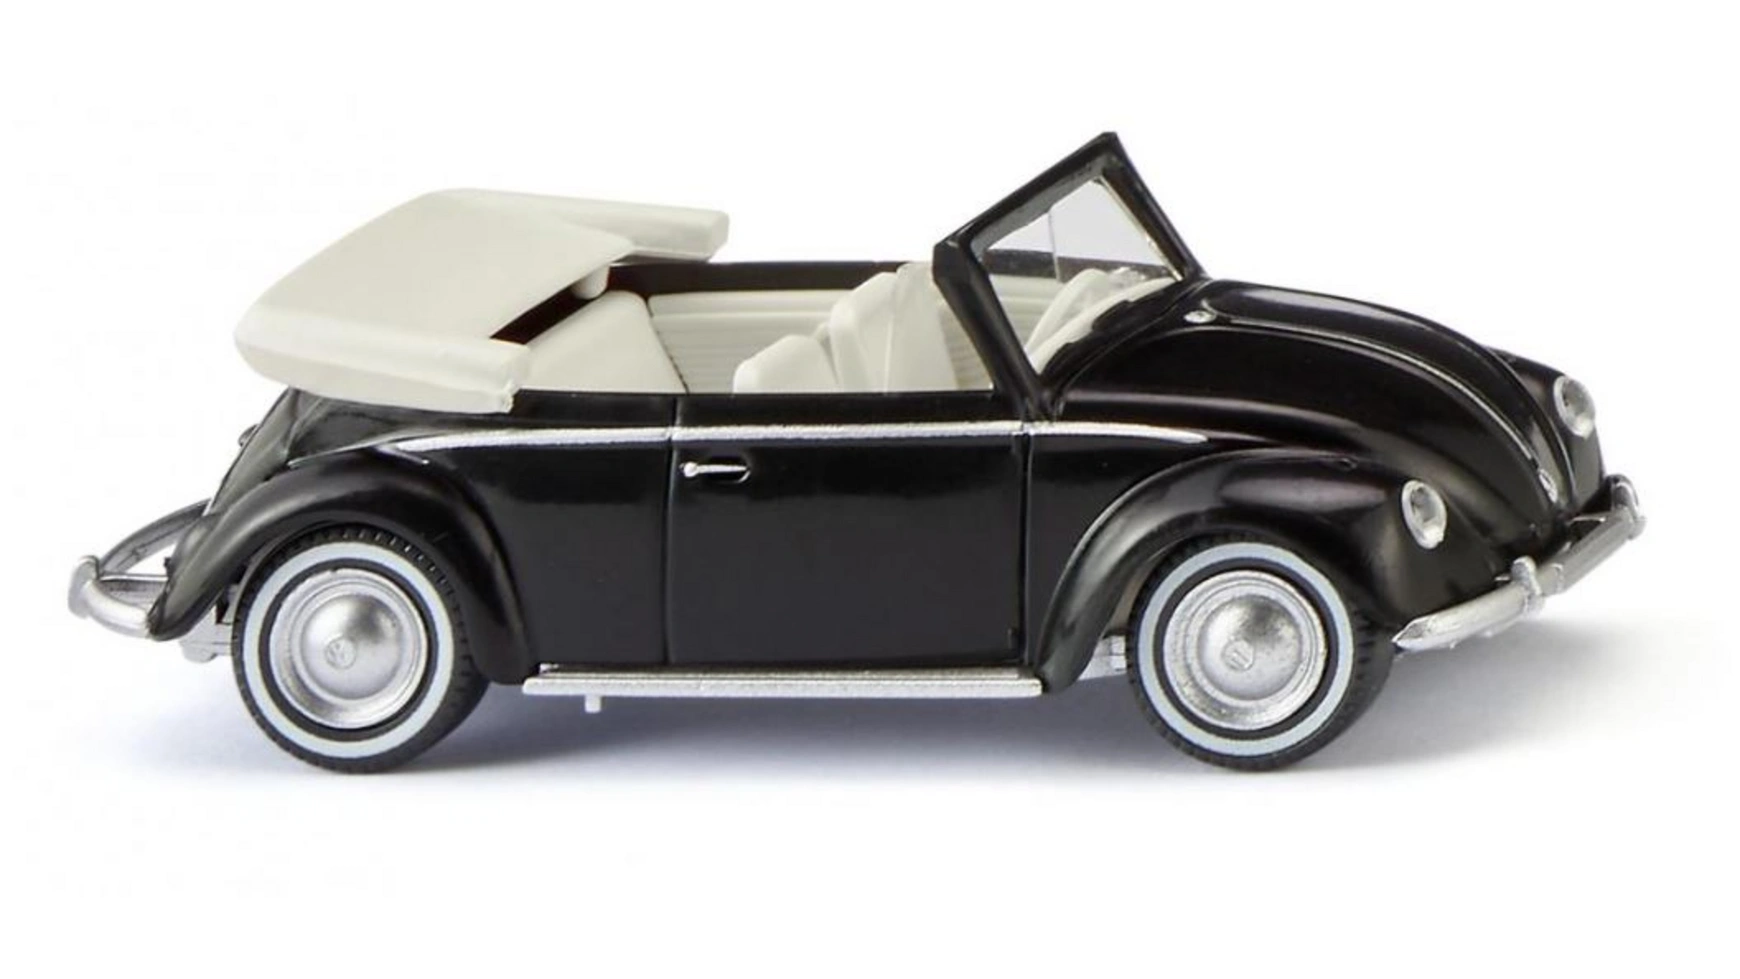 Wiking 1:87 VW Beetle 1200 Cabrio черный bandai чудесный vw e beetle